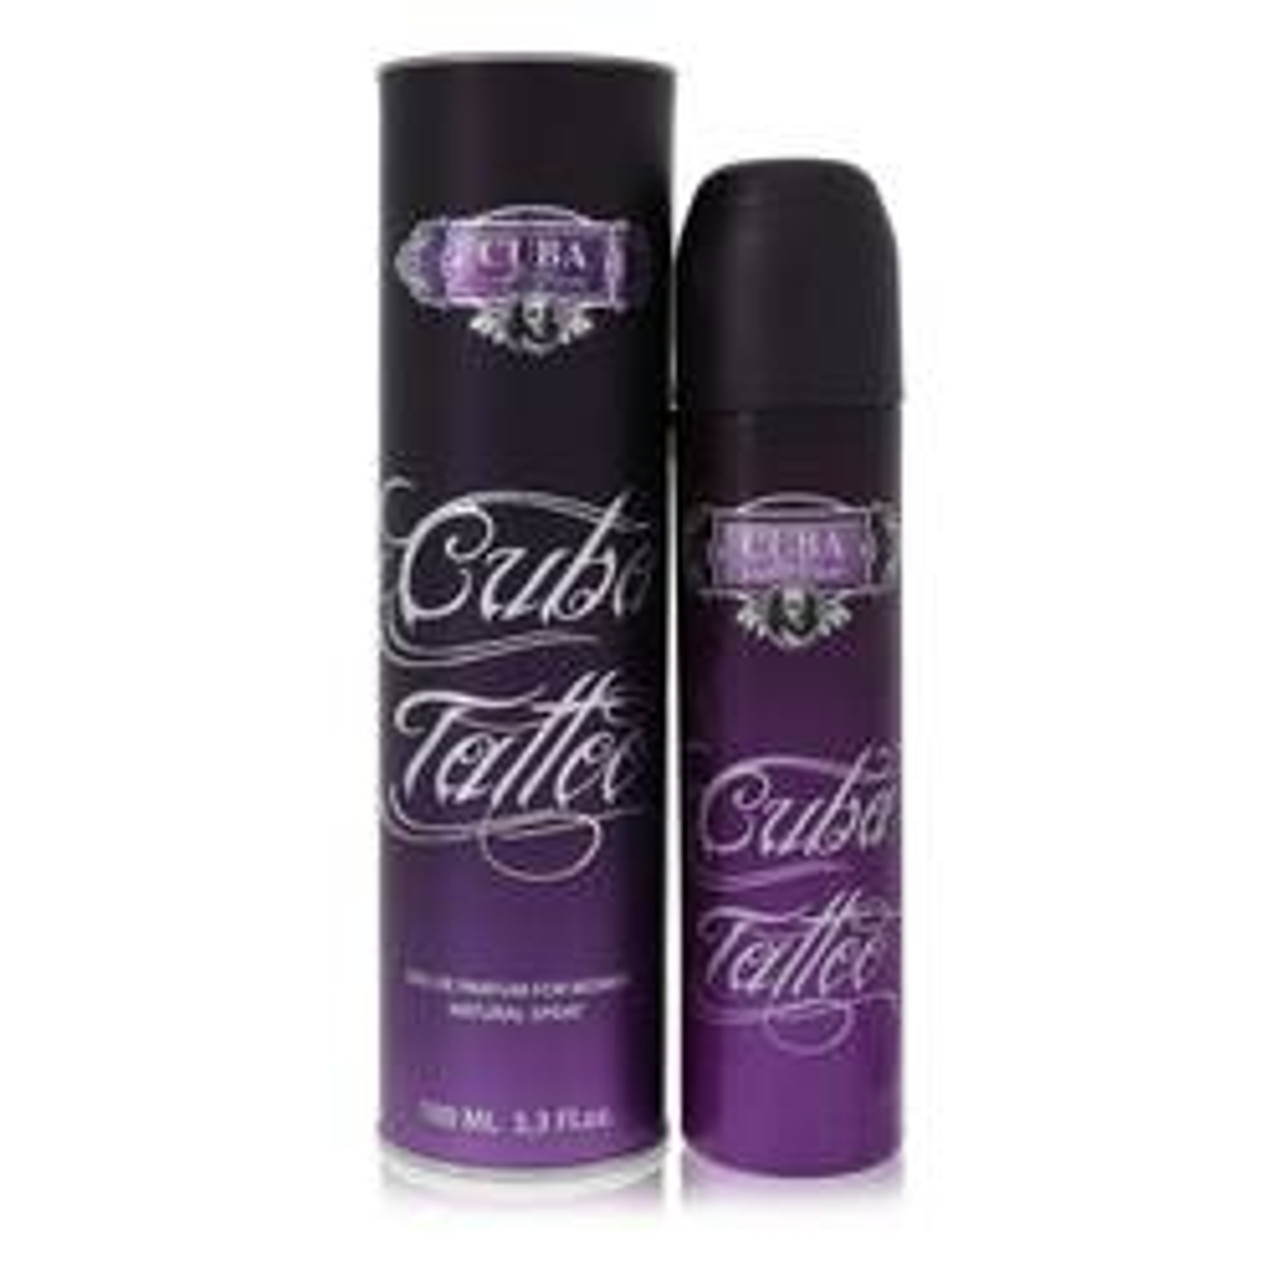 Cuba Tattoo Perfume By Fragluxe Eau De Parfum Spray 3.4 oz for Women - [From 23.00 - Choose pk Qty ] - *Ships from Miami